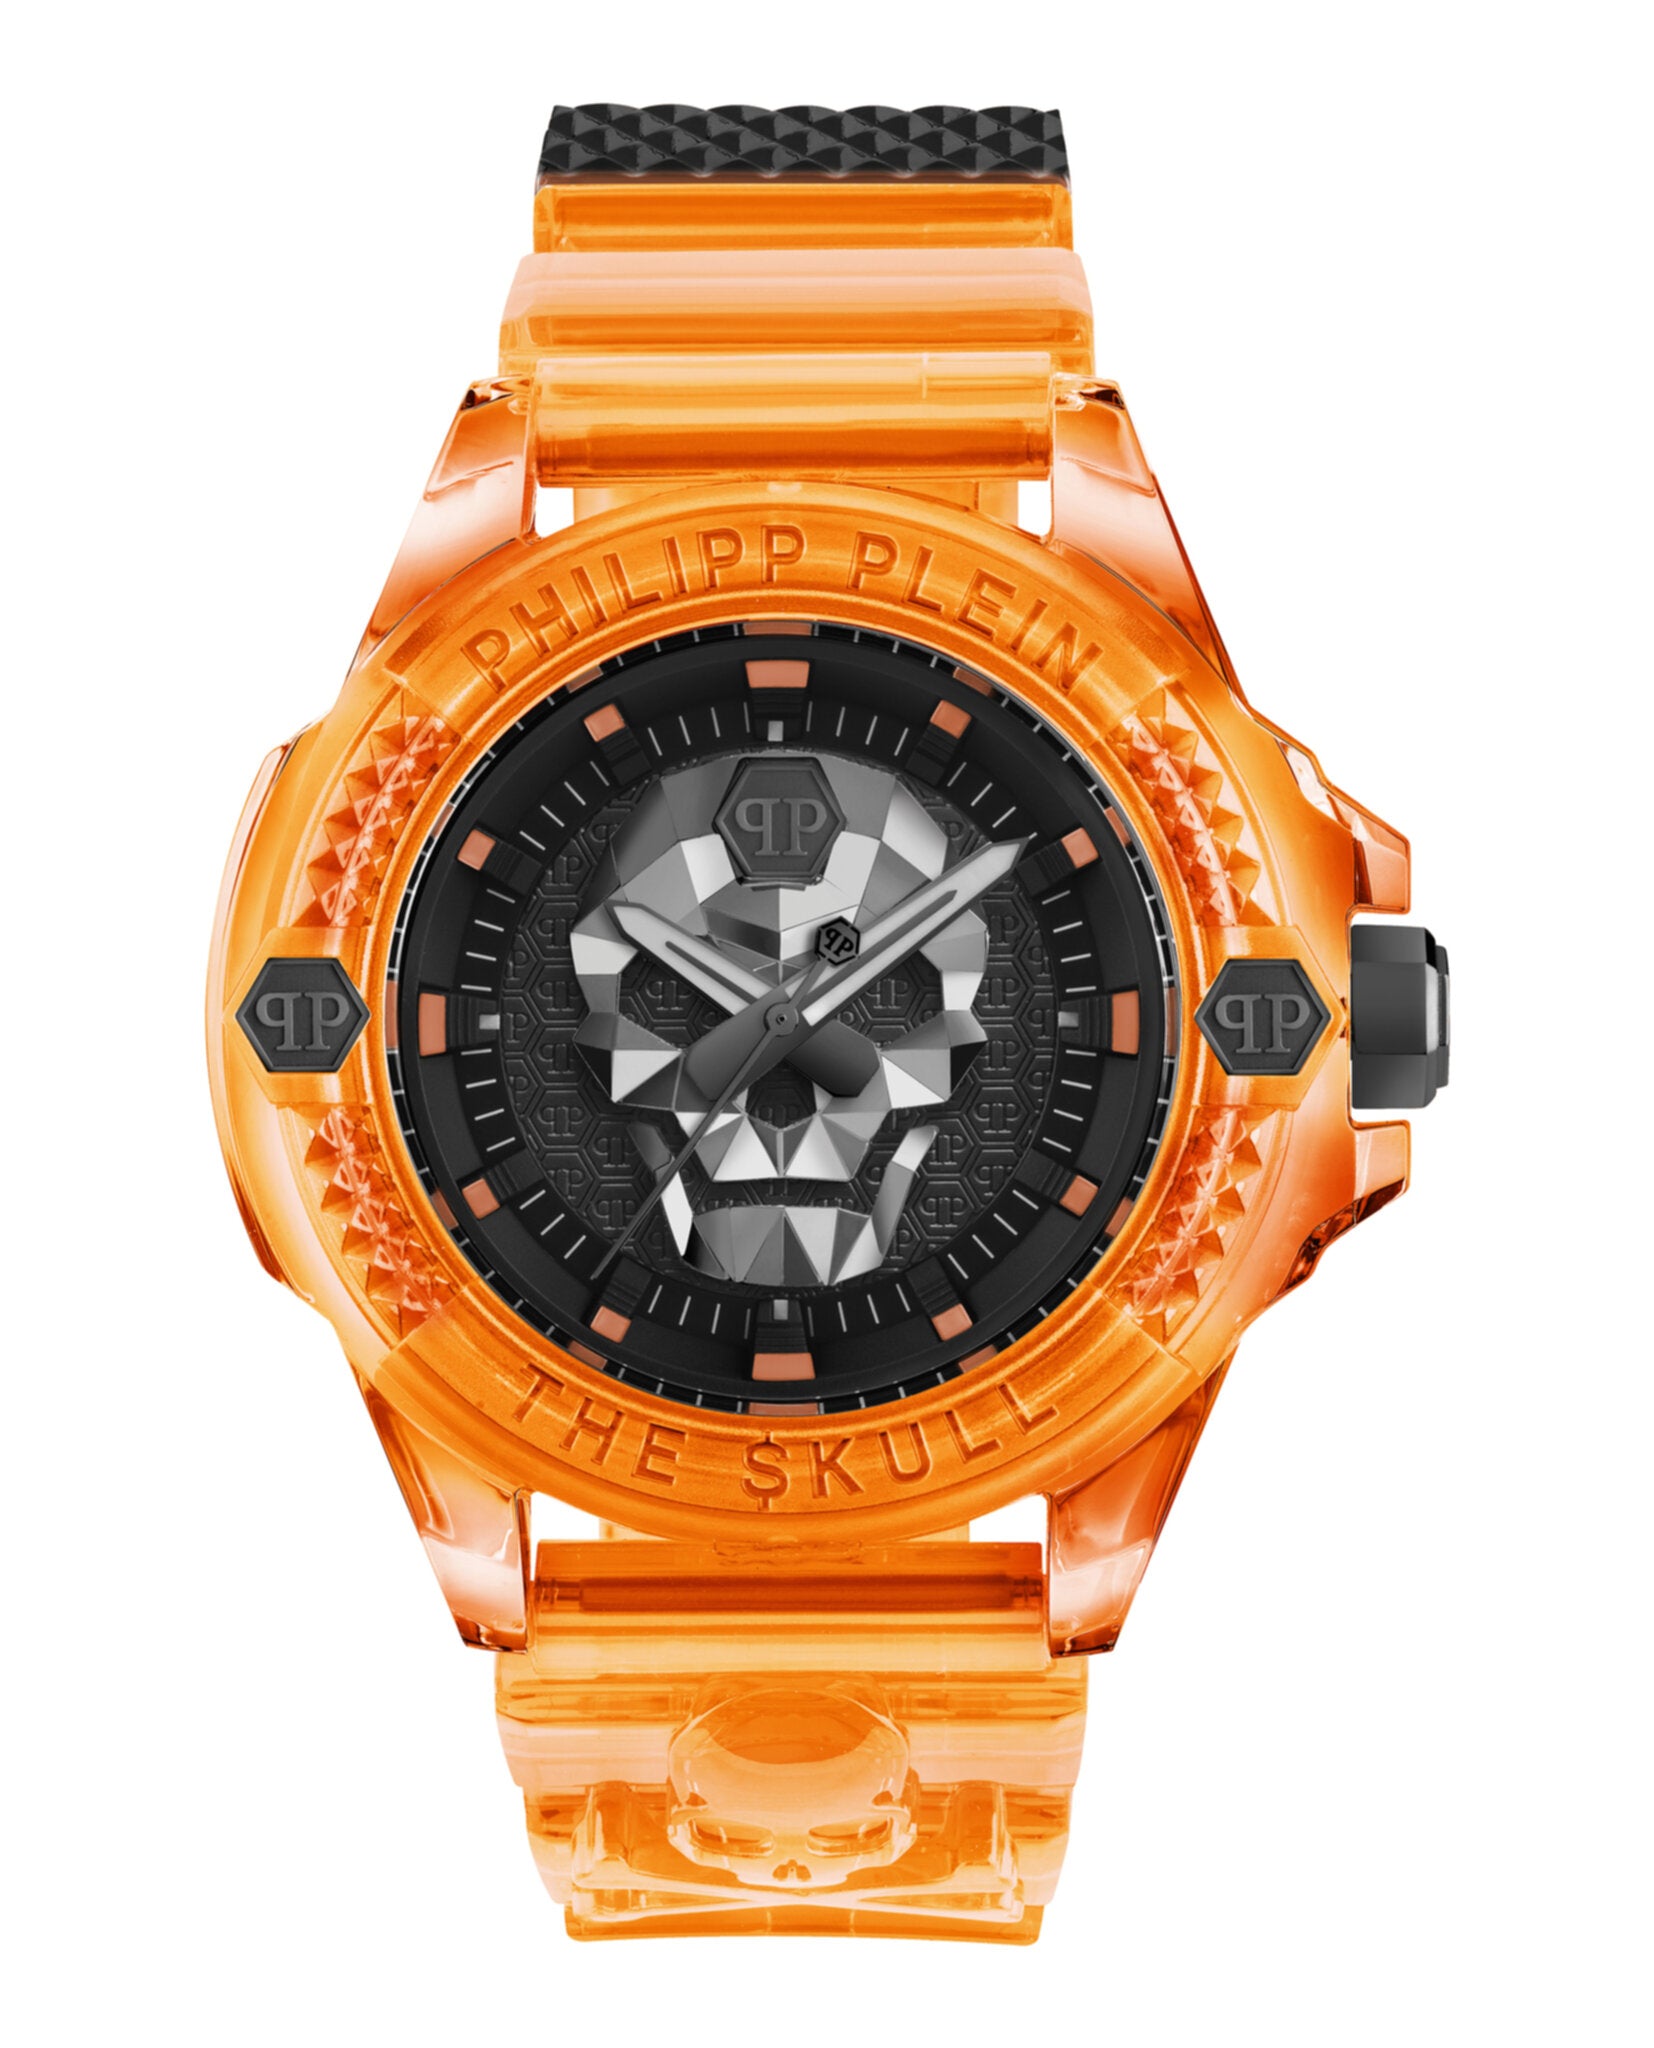 The $kull Scuba Duba Edition Silicone Watch